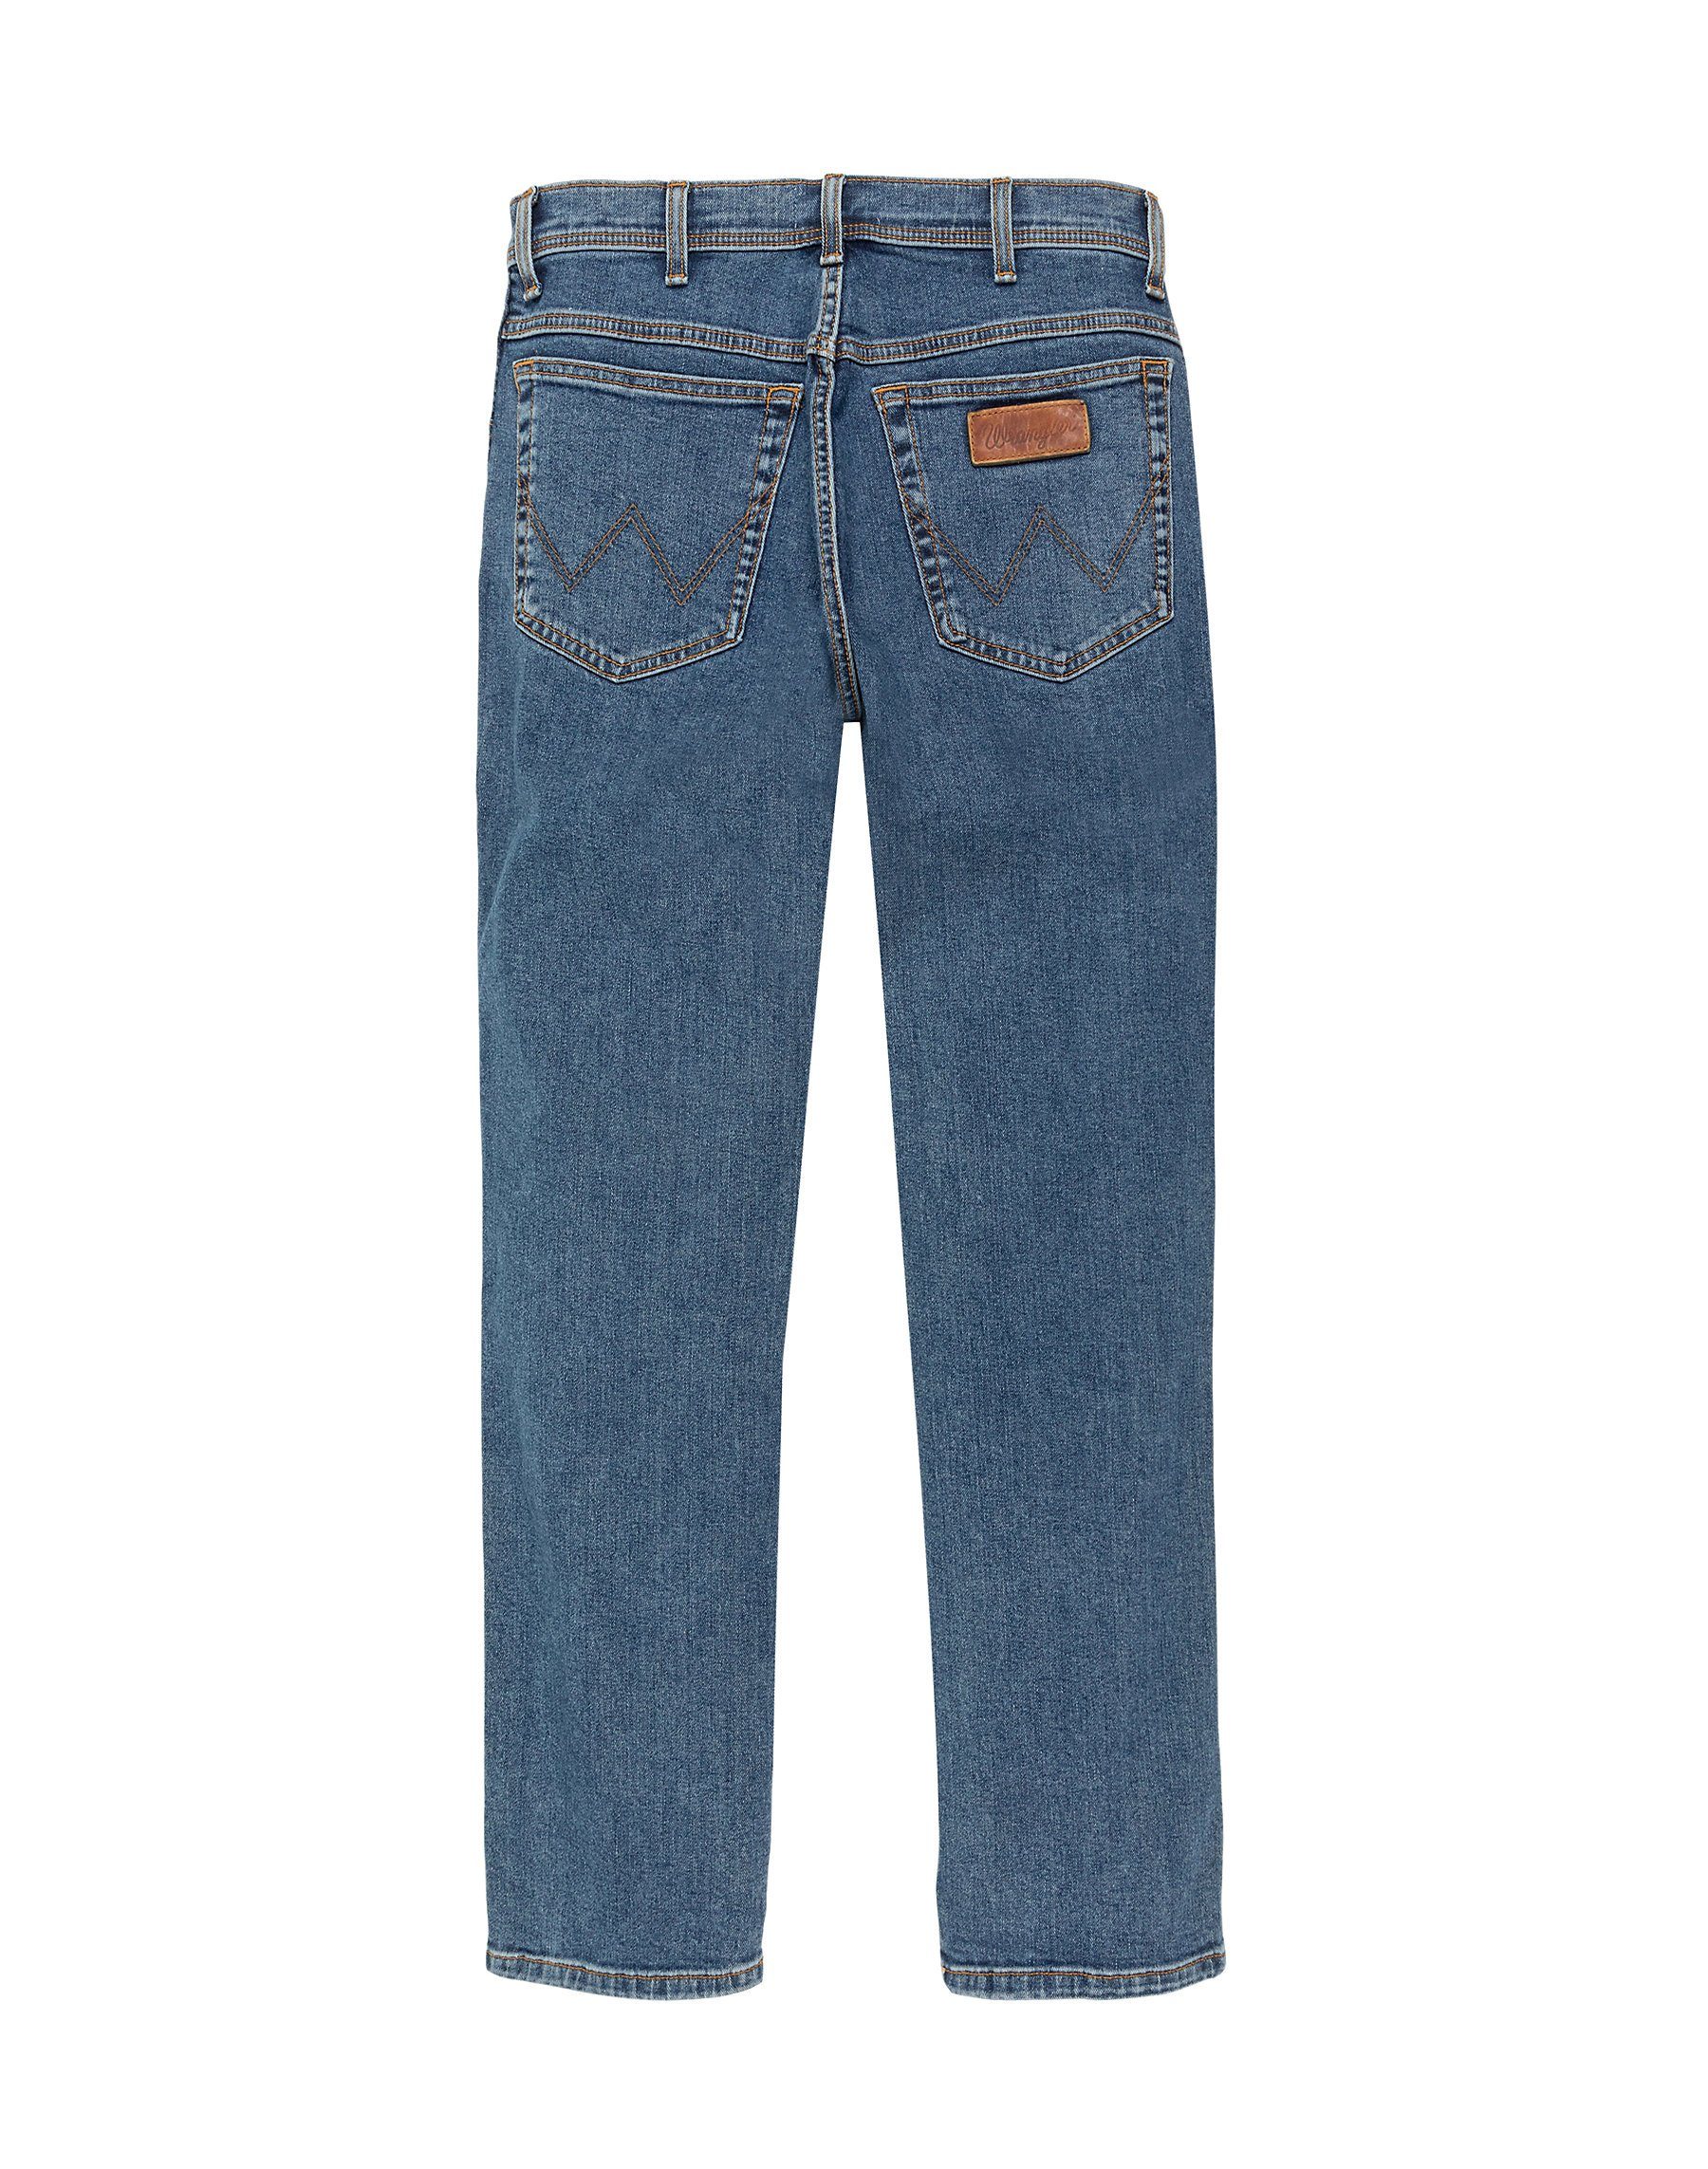 5-Pocket-Jeans TEXAS Wrangler SLIM stonewash W12S33010 WRANGLER vintage blue